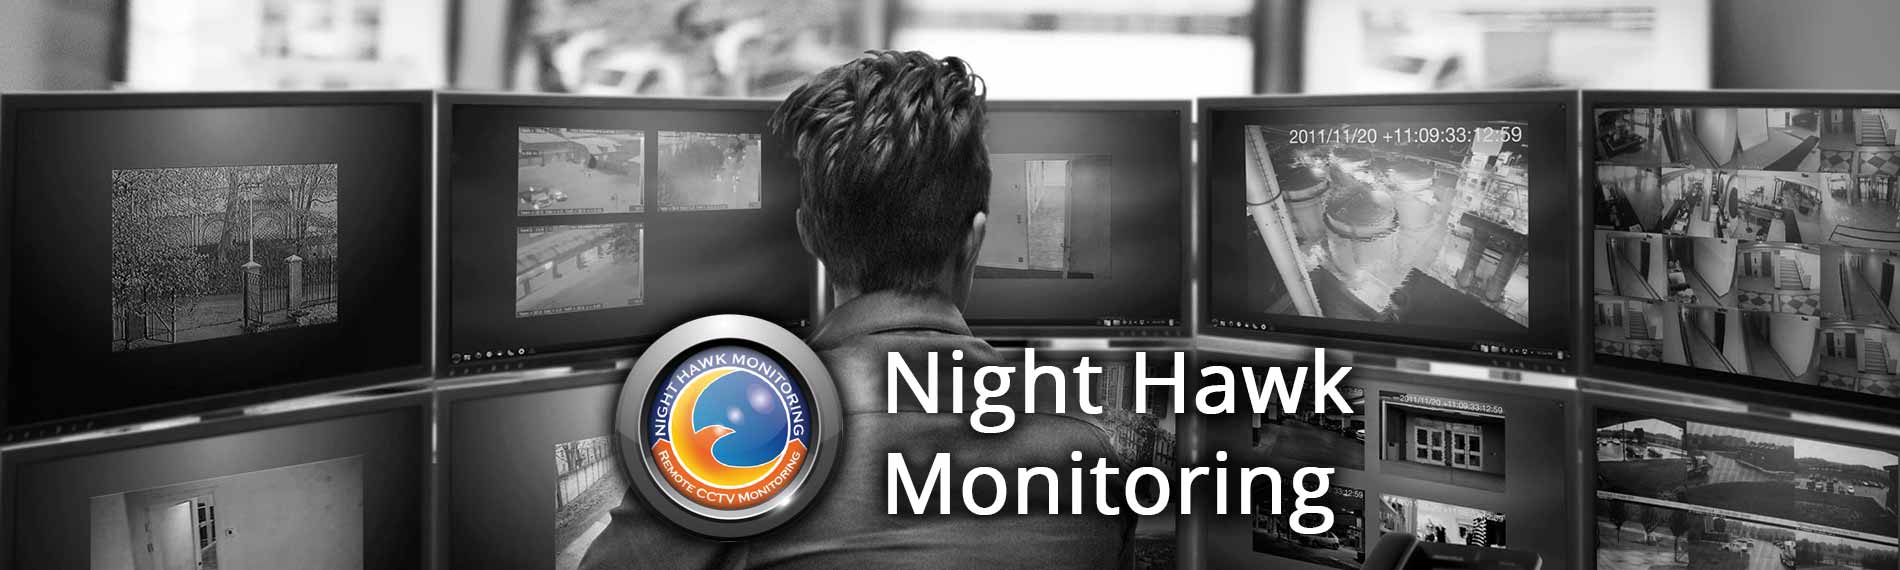 HIALEAH REMOTE VIDEO SURVEILLANCE SECURITY CAMERAS MONITORING SYSTEM SERVICES COMPANY HIALEAH FLORIDA